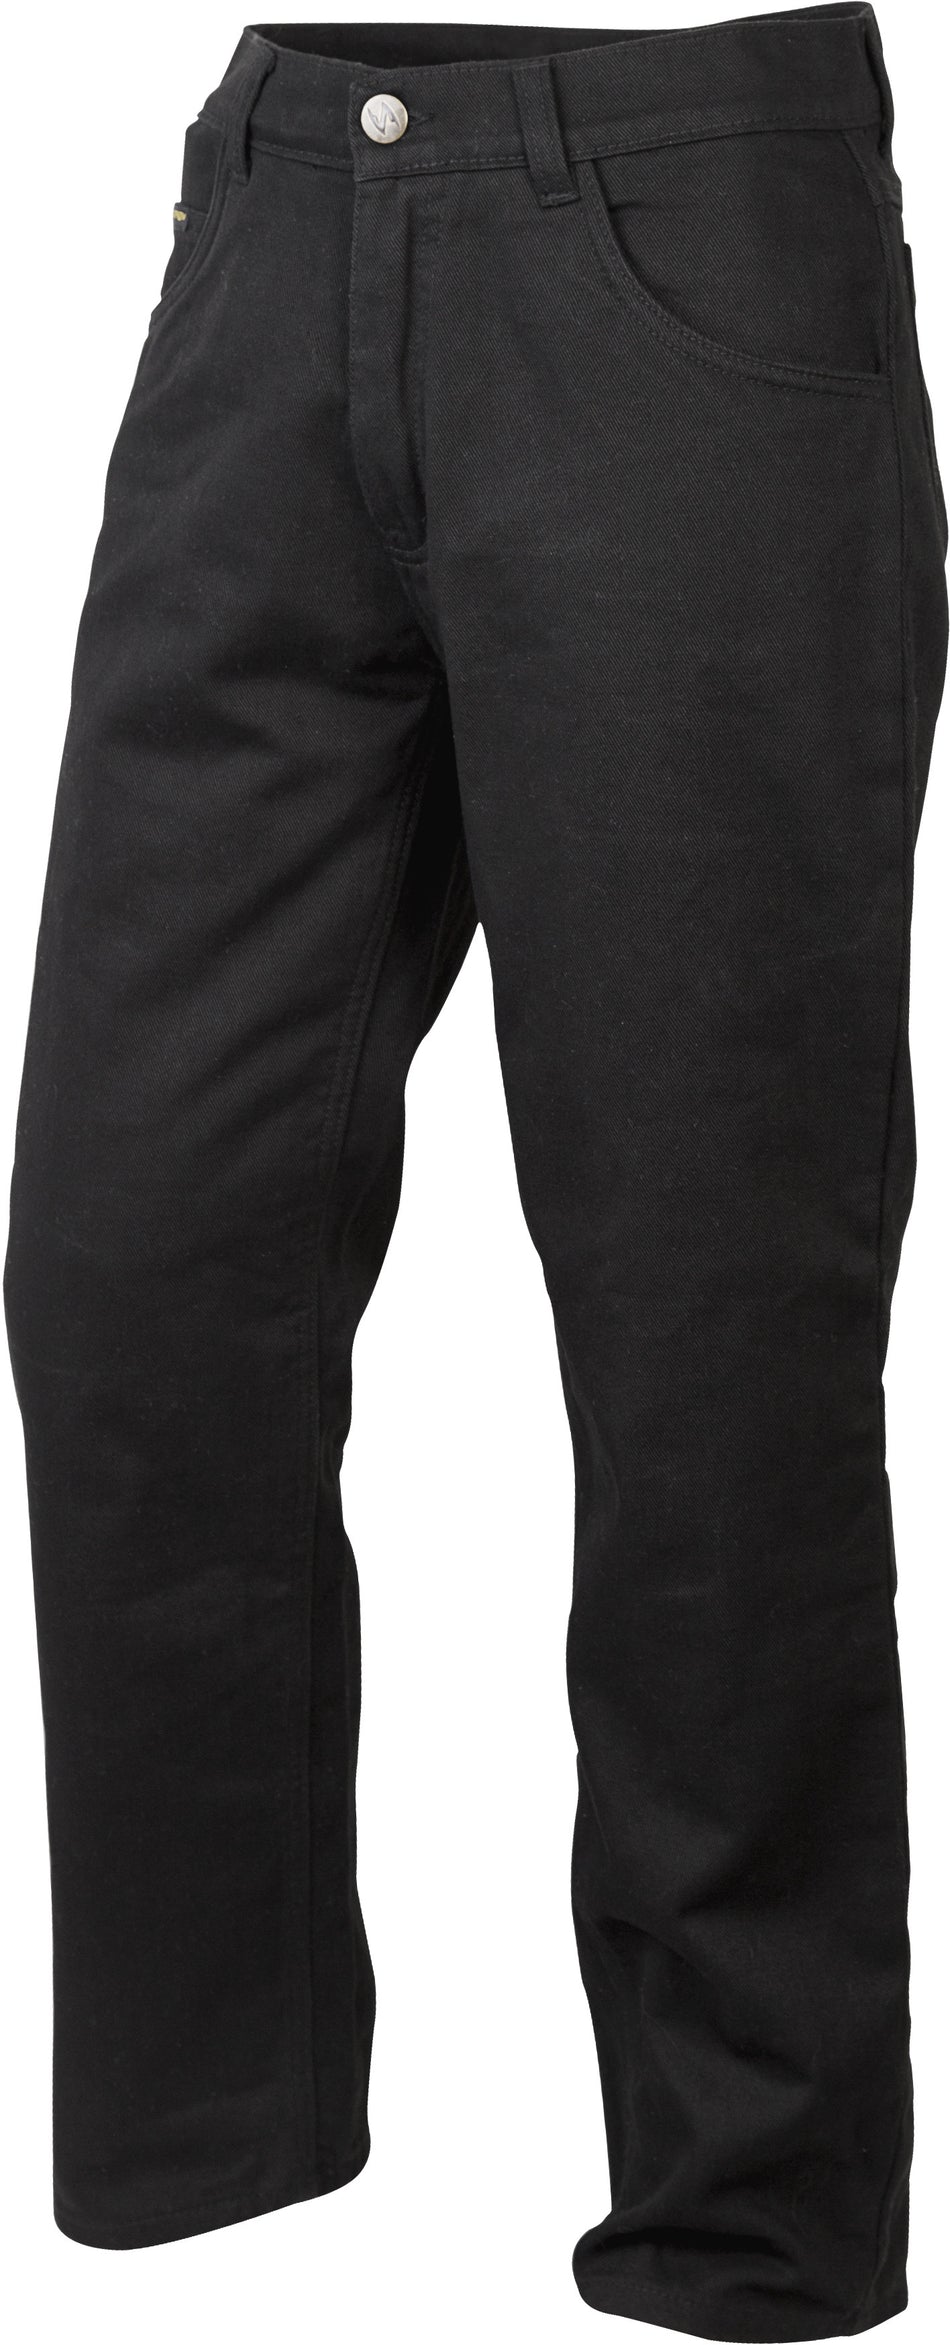 SCORPION EXO Covert Jeans Black Size 34 2503-34